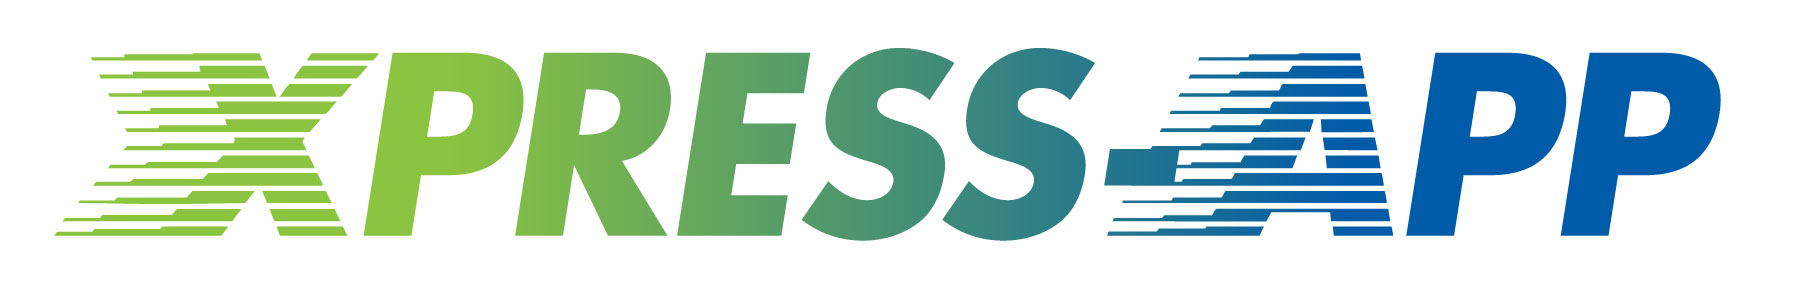 XPRESS-APP logo image